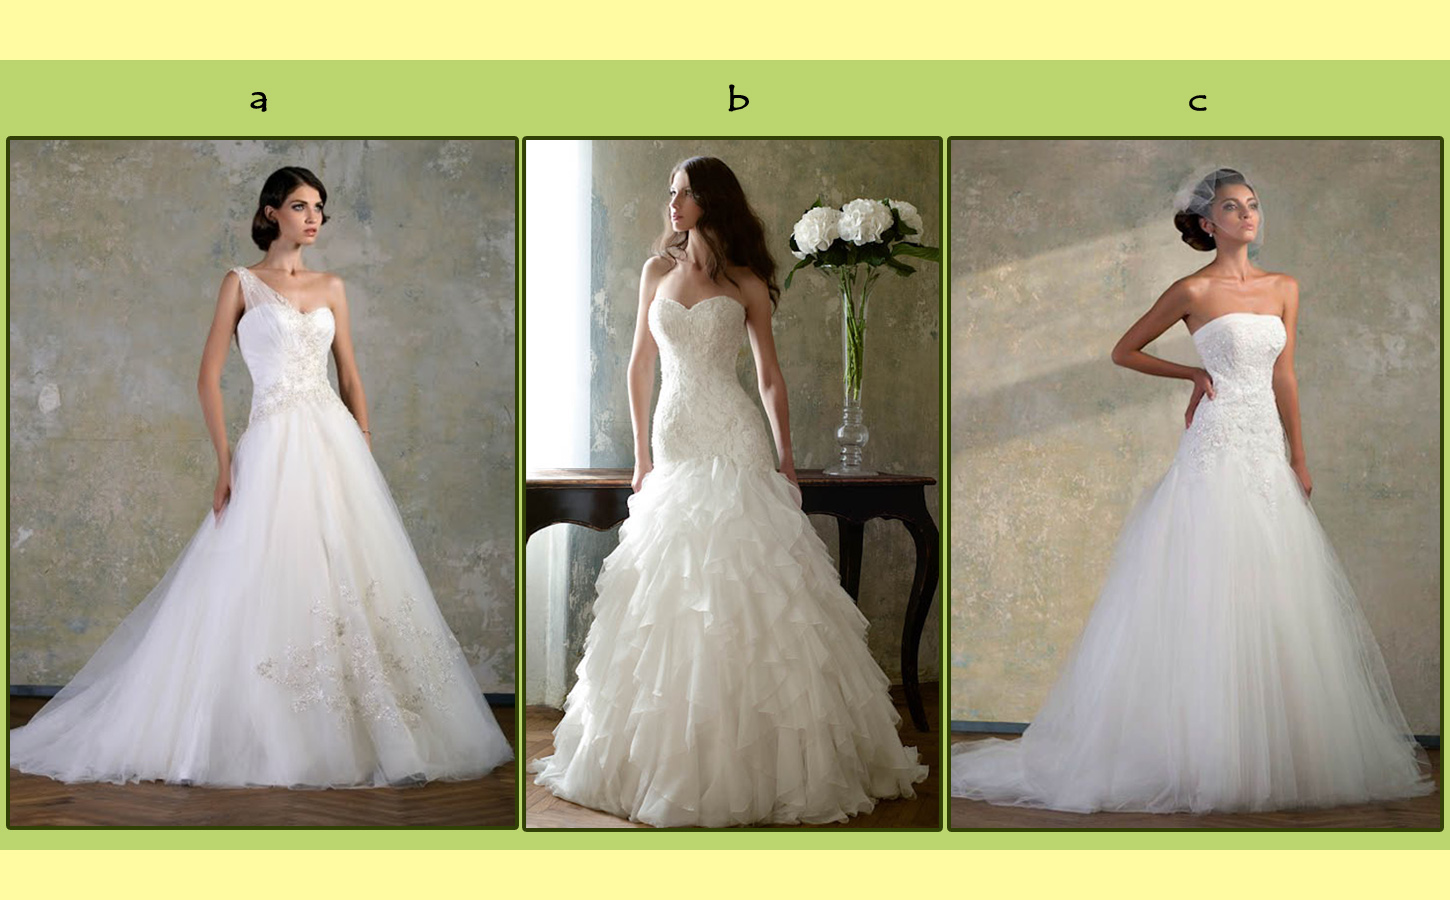 lace wedding dresses 2014 open back  from Bien Savvy's fabulous, feminine look and elegant wedding dress